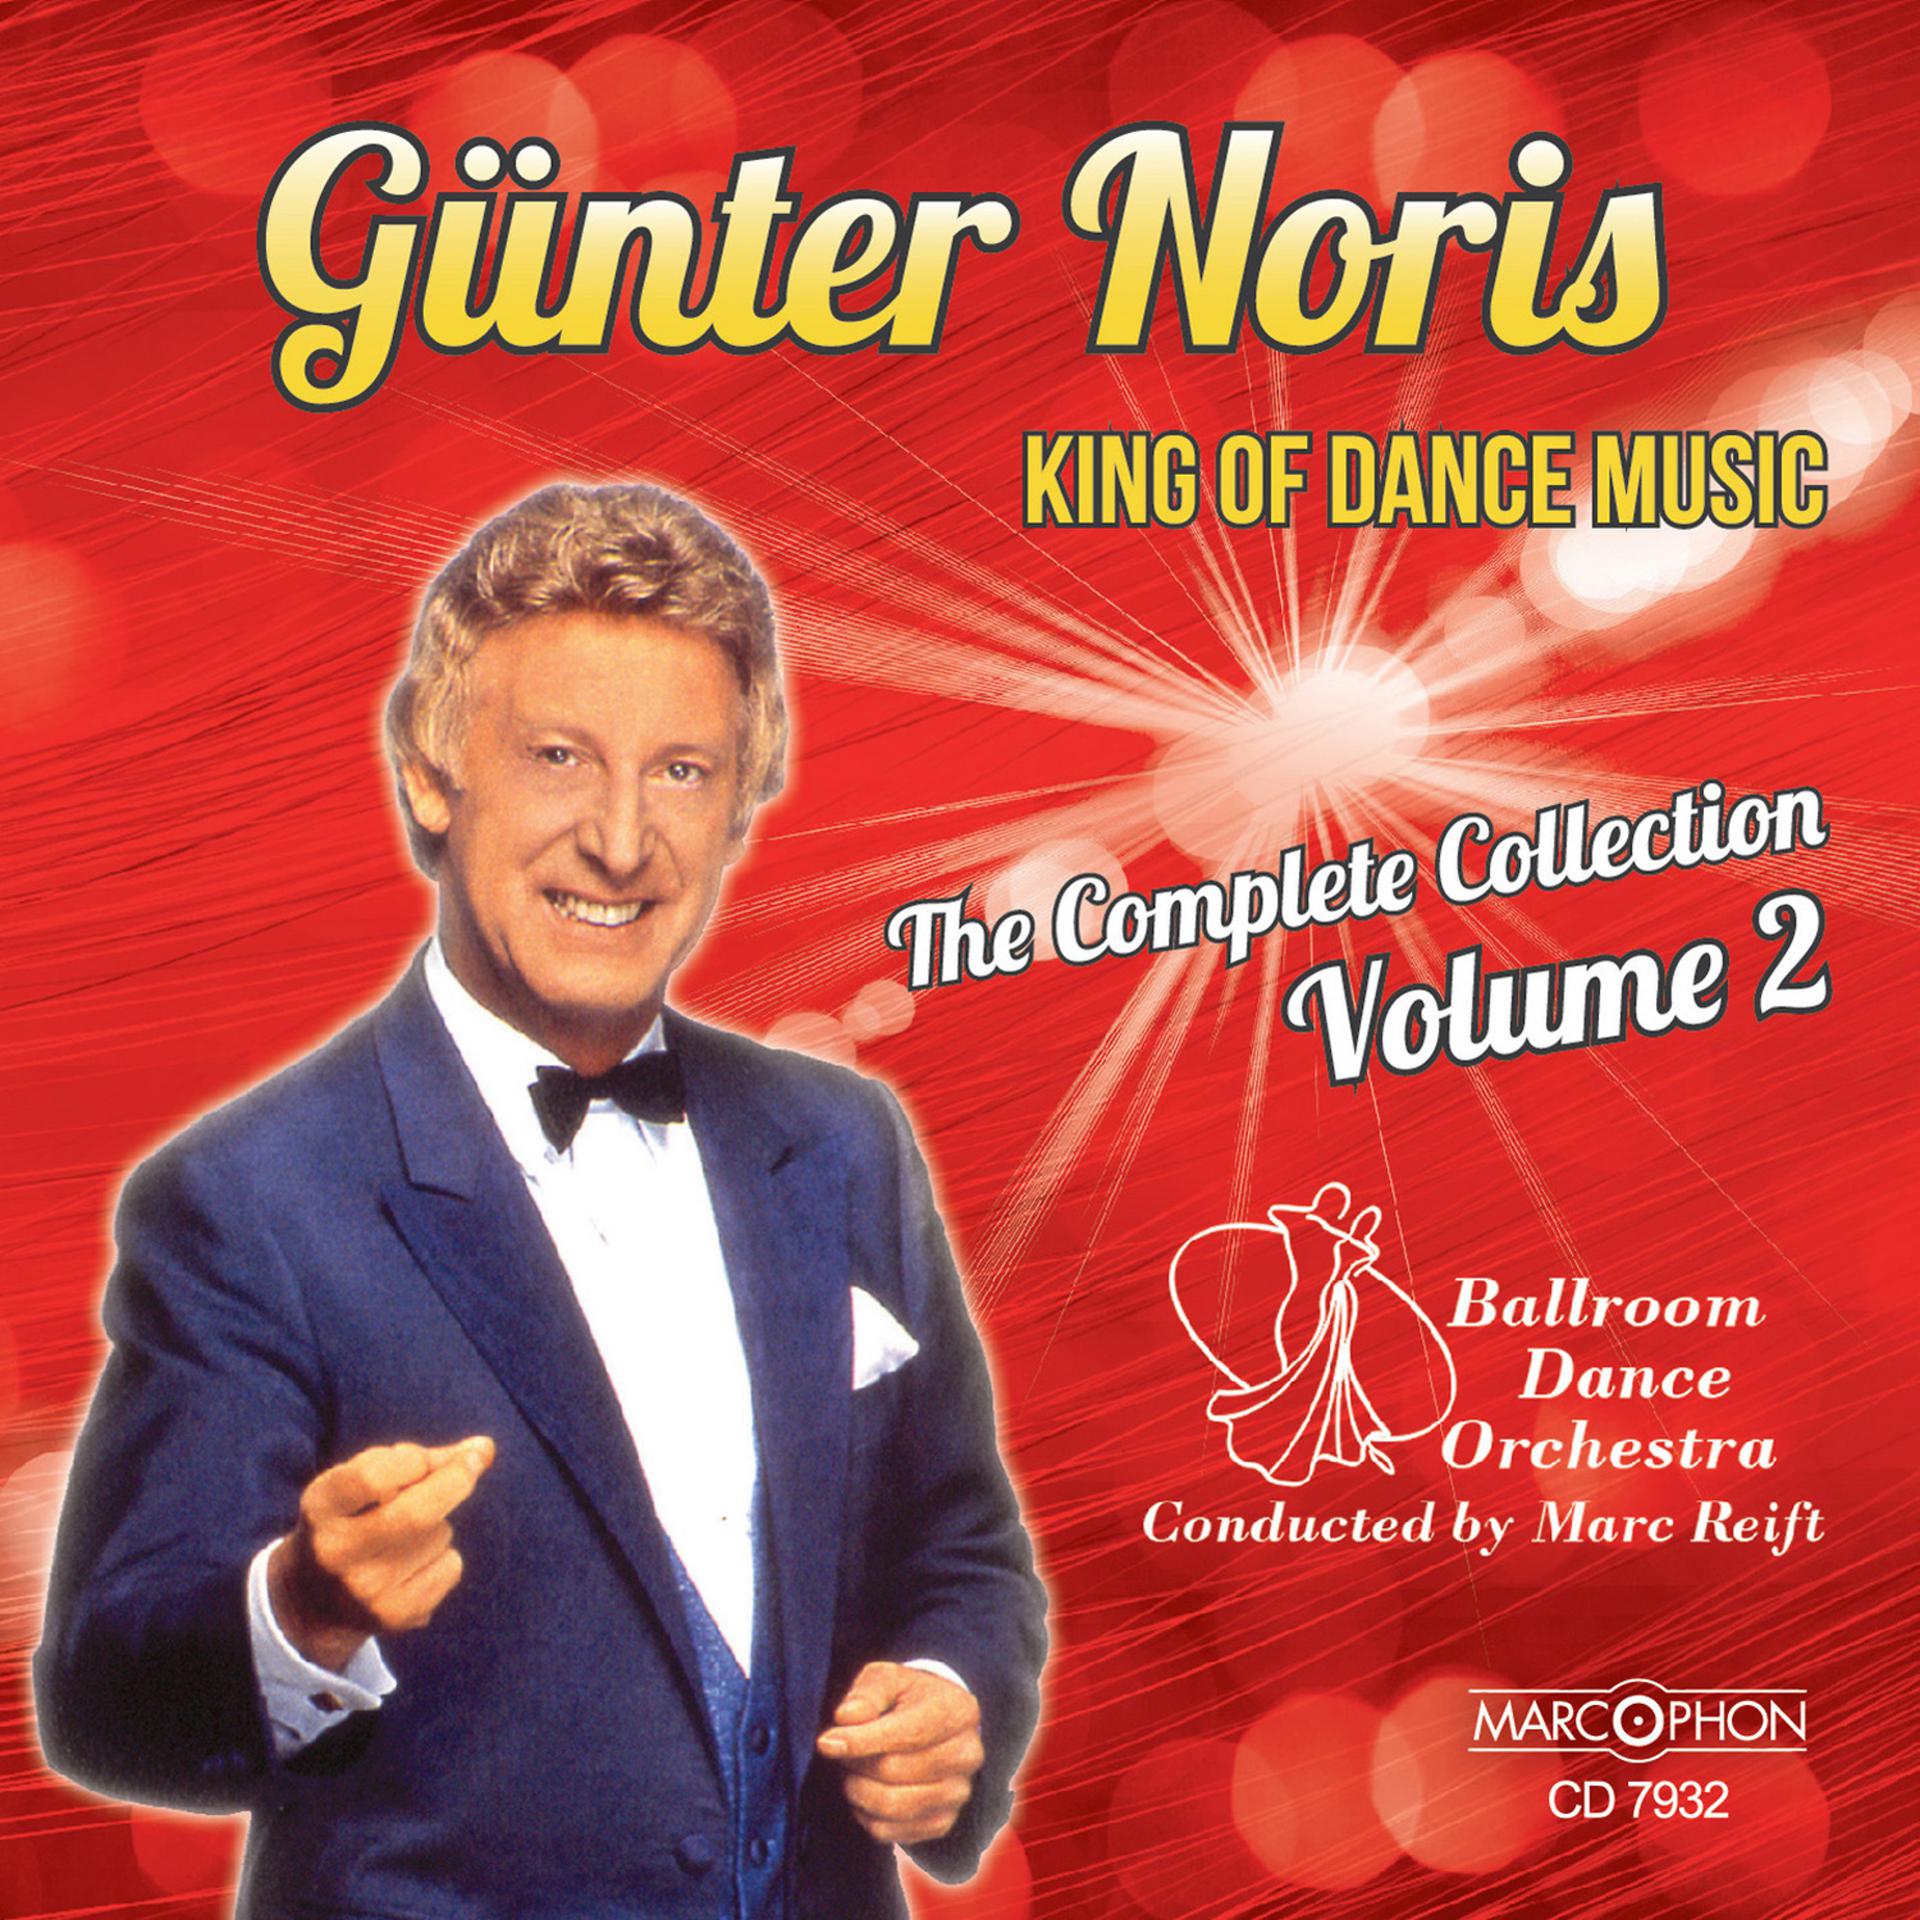 Постер альбома Günter Noris "King of Dance Music" The Complete Collection Volume 2